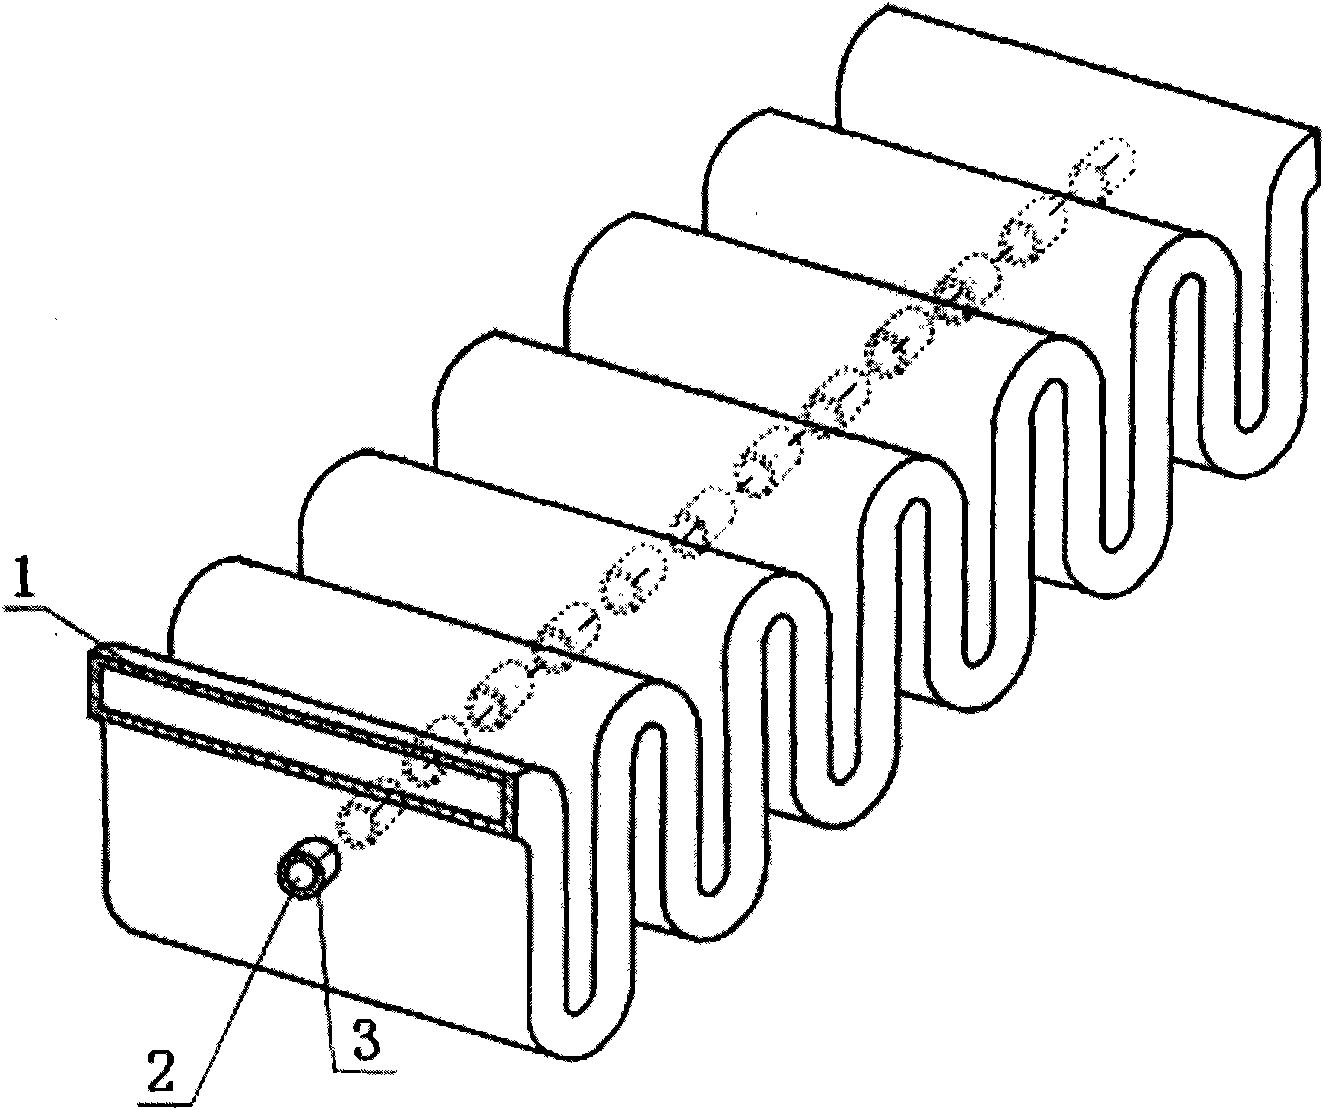 Rectangular-grooved loading winding waveguide slow wave line